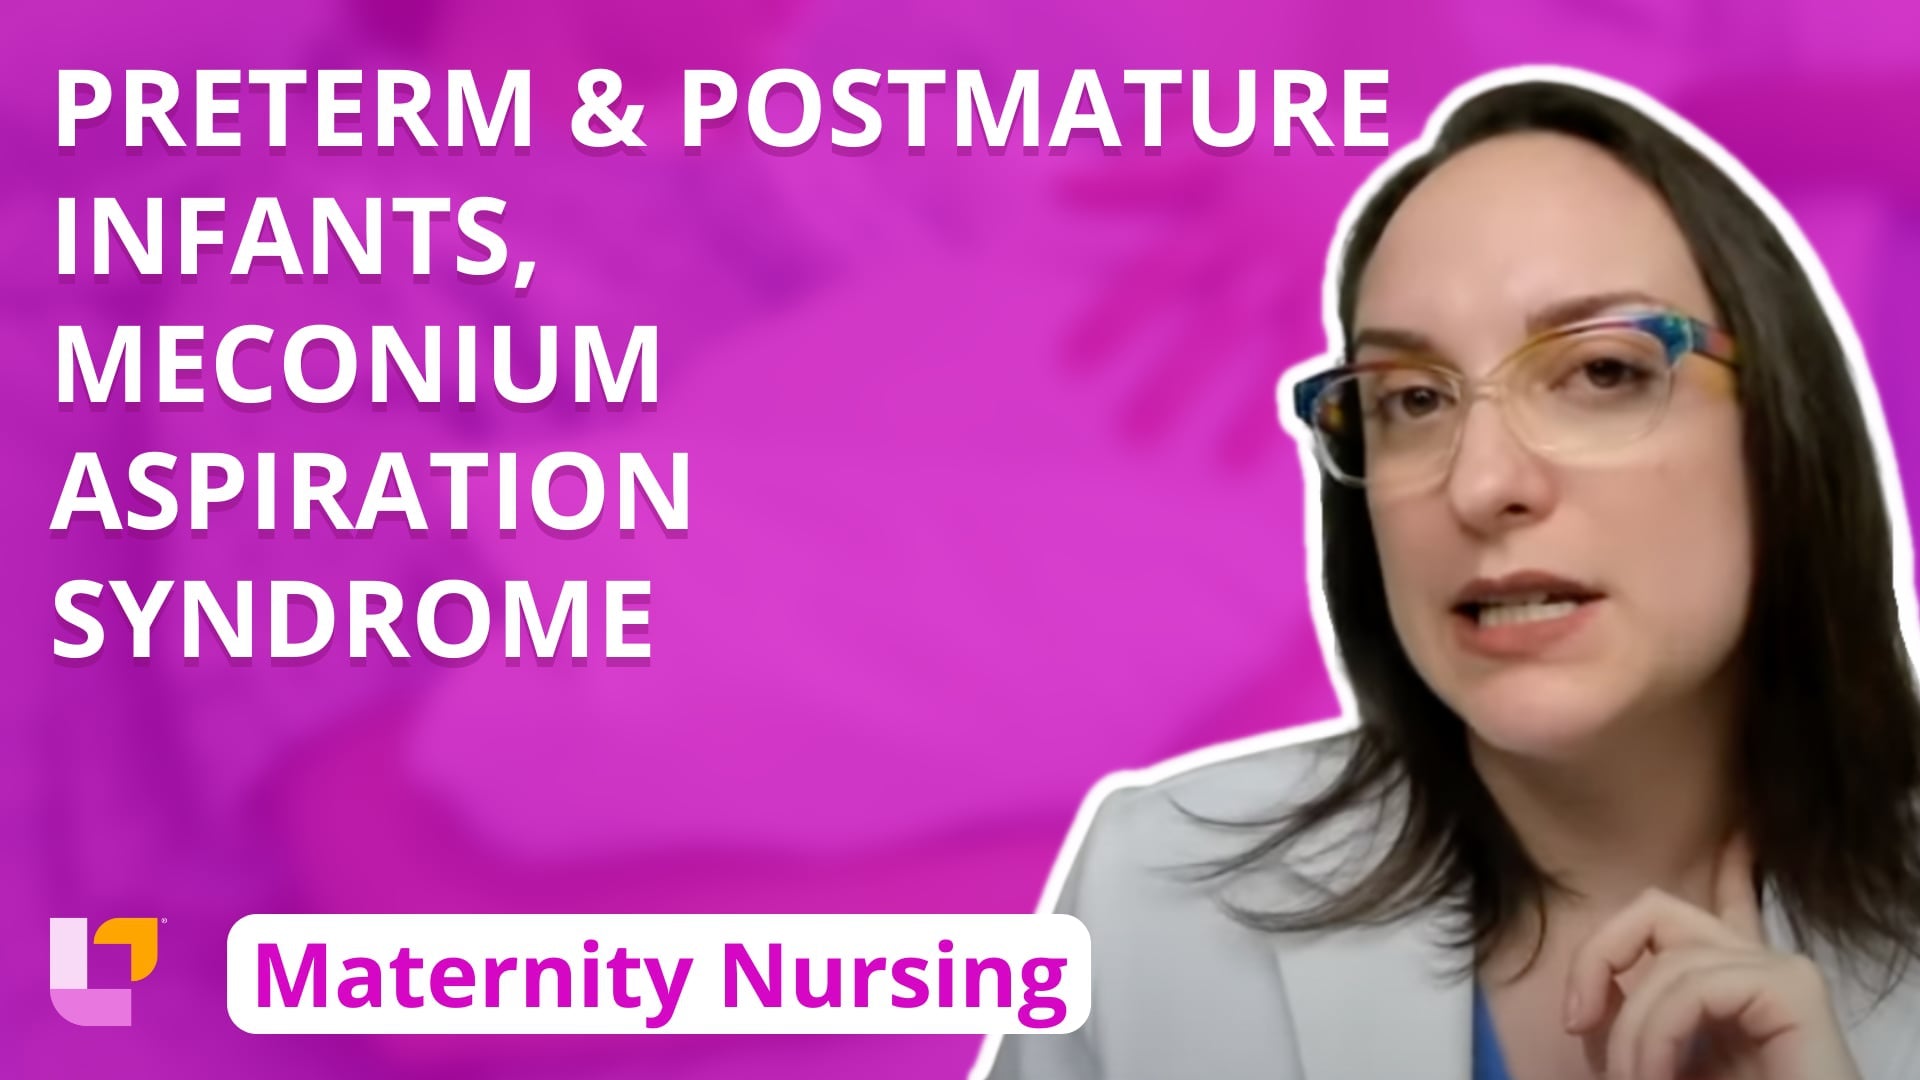 Maternity - Newborn, part 6: Preterm and Postmature Infants, Meconium Aspiration Syndrome - LevelUpRN